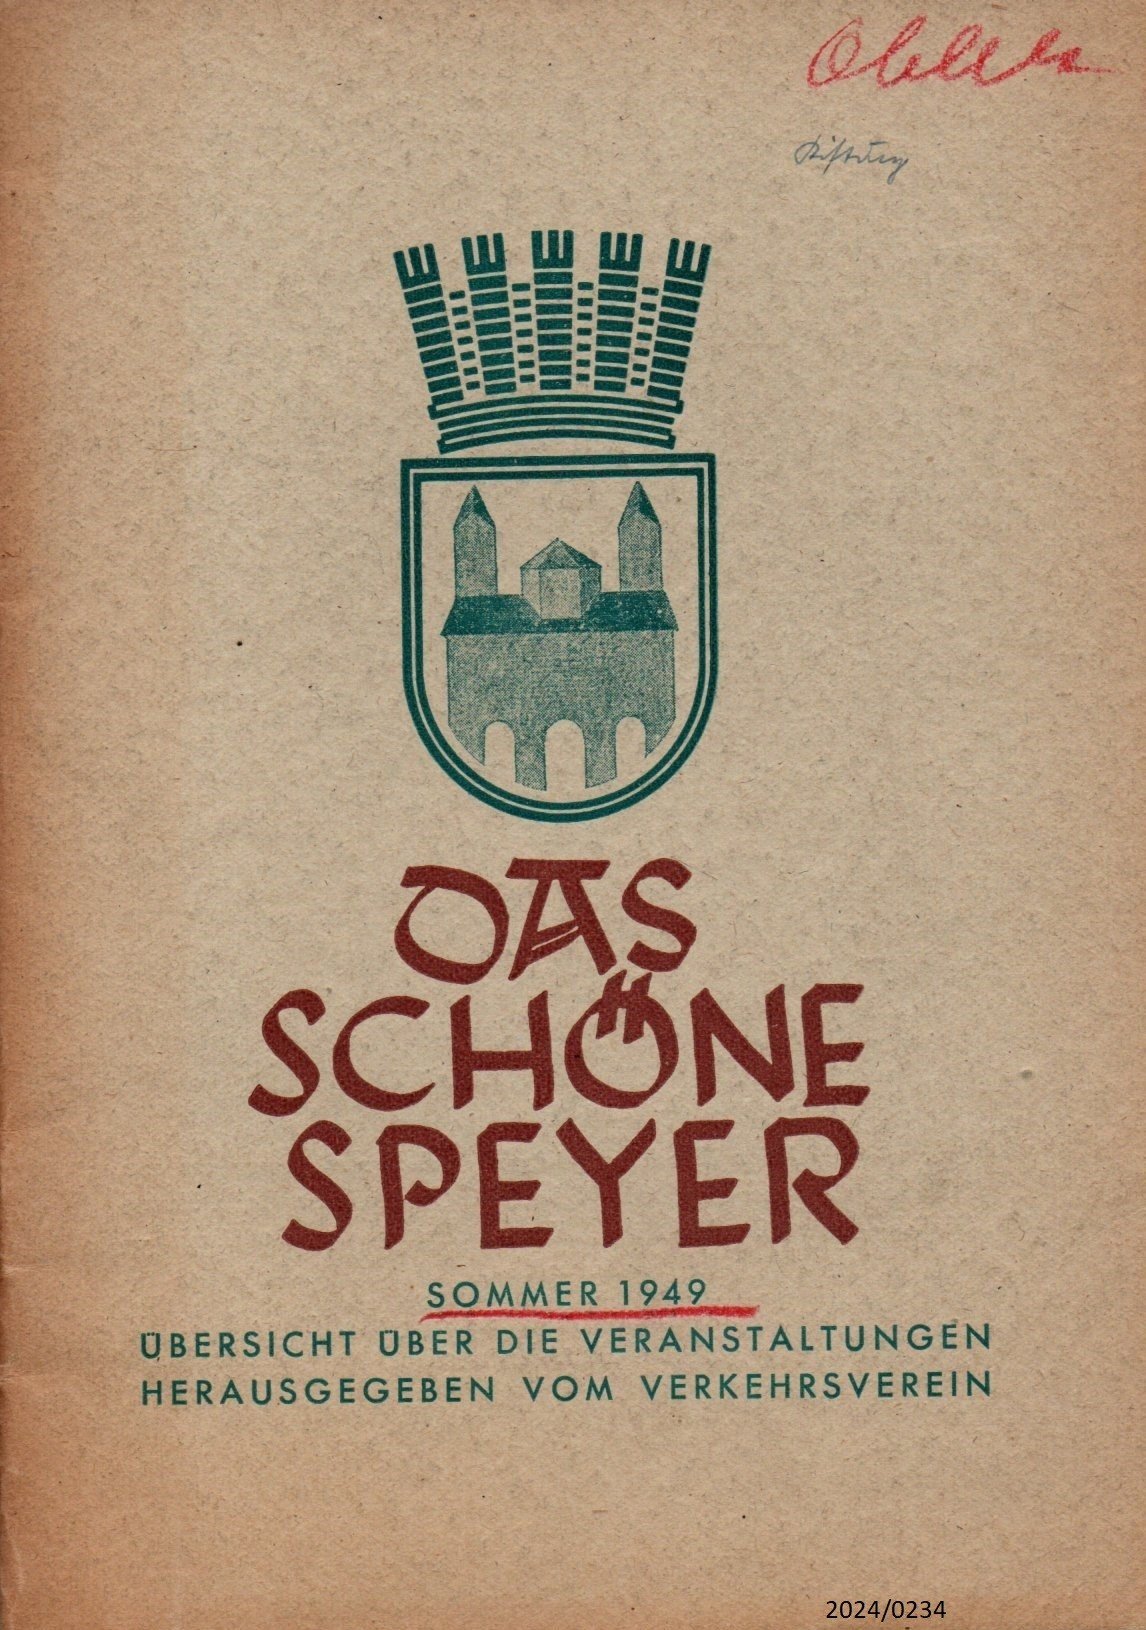 Das schöne Speyer - Sommer 1949 (Stadtmuseum Bad Dürkheim im Kulturzentrum Haus Catoir CC BY-NC-SA)